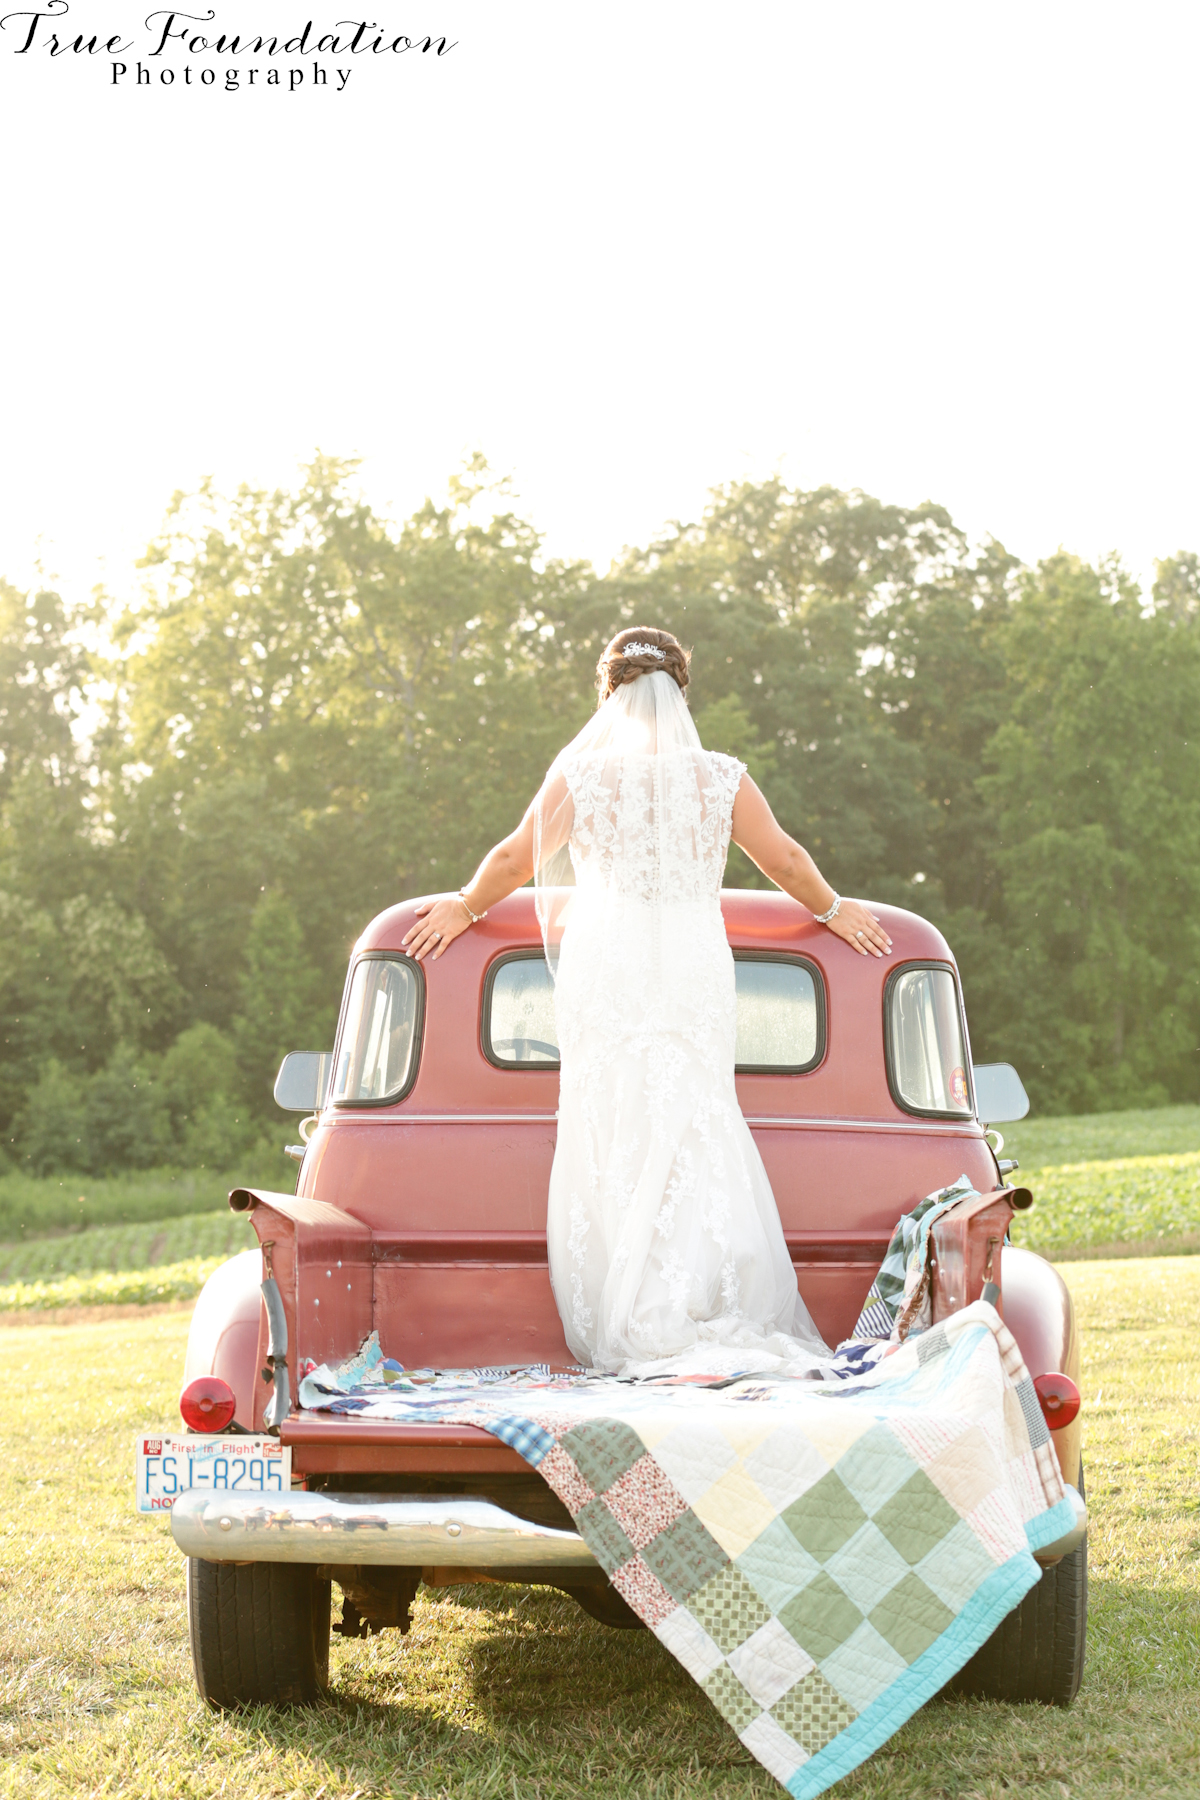 Bridal - Portrait - Photography - Photos - Hendersonville - NC - Shelby - Photographers - Farm - Country - Pinterest - Bride (40)